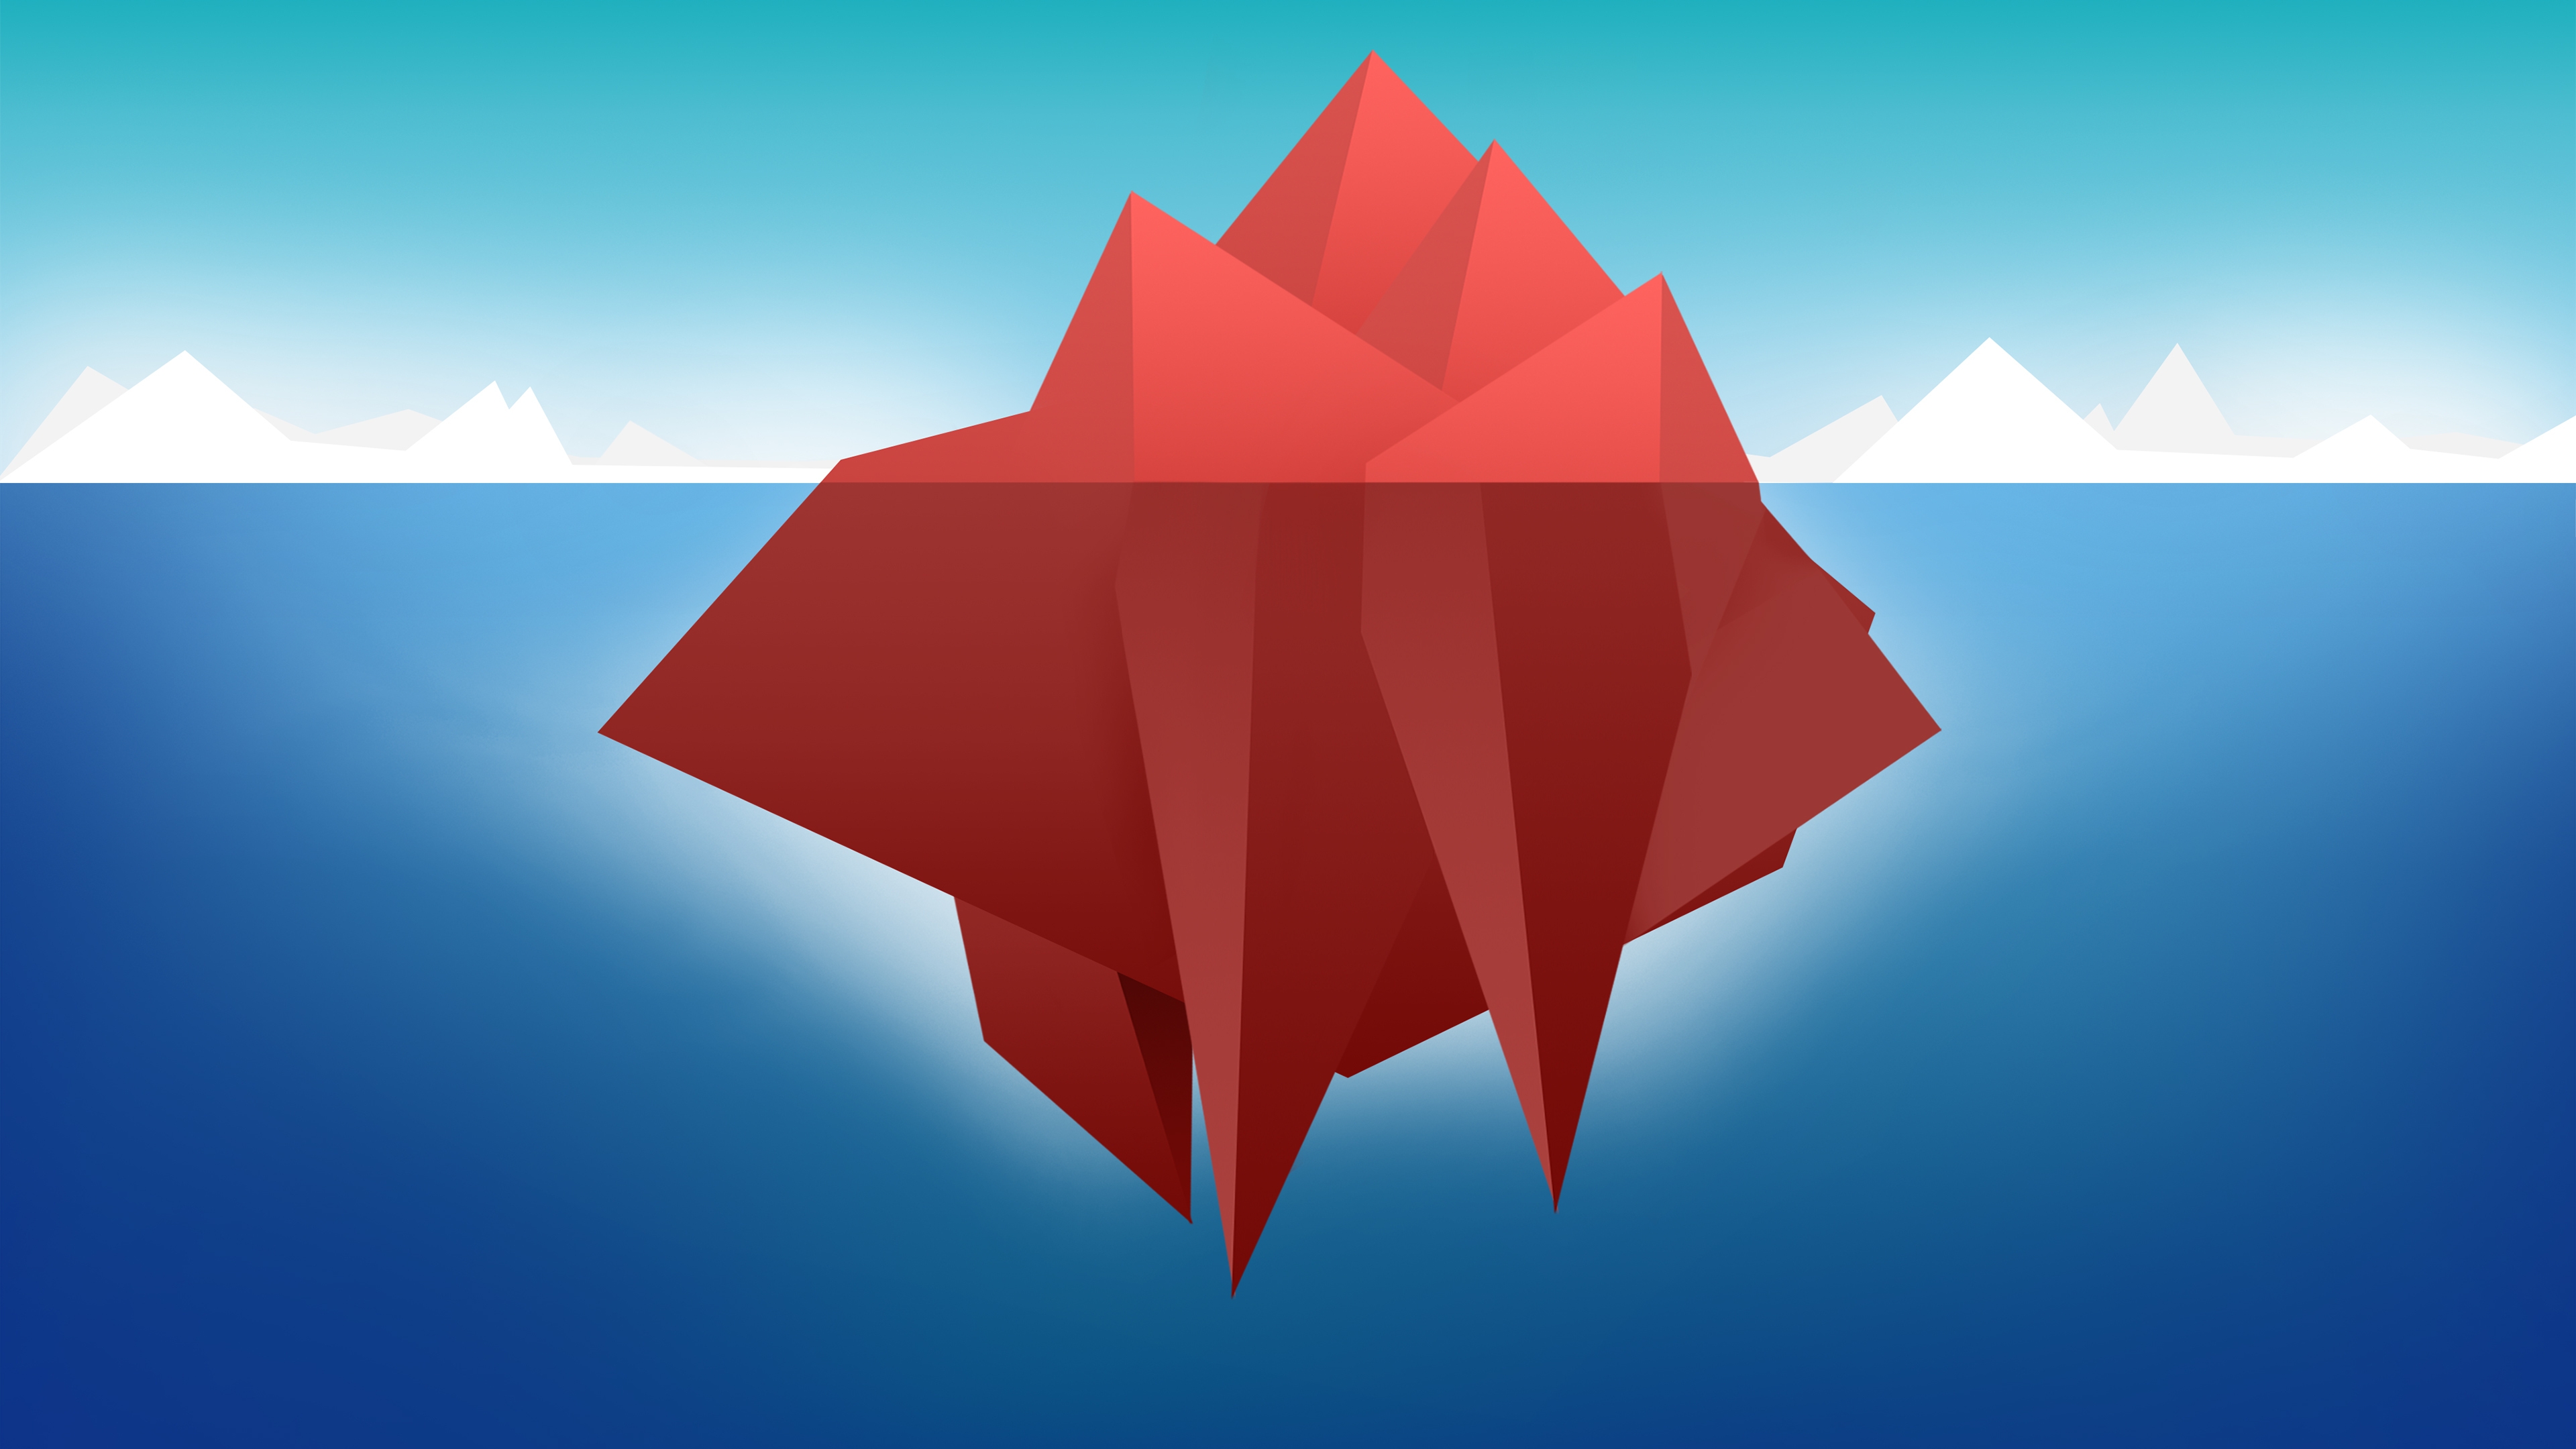 Red Minimal Iceberg for 3840 x 2160 Ultra HD resolution